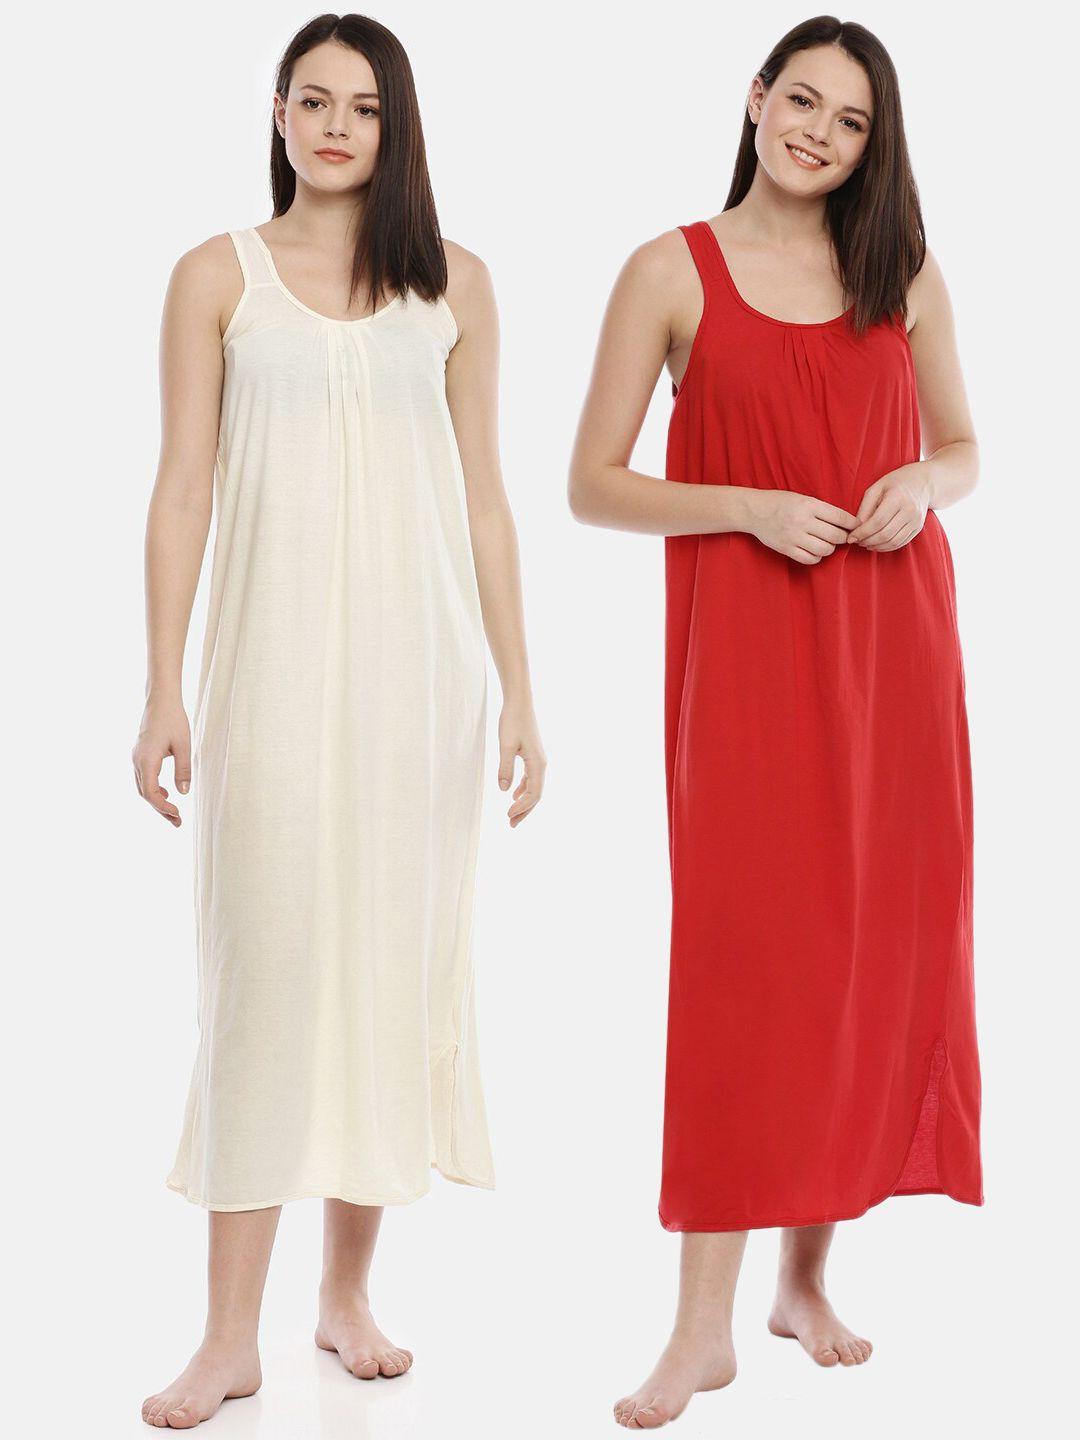 goldstroms pack of 2 cream & red sleeveless cotton nightdress